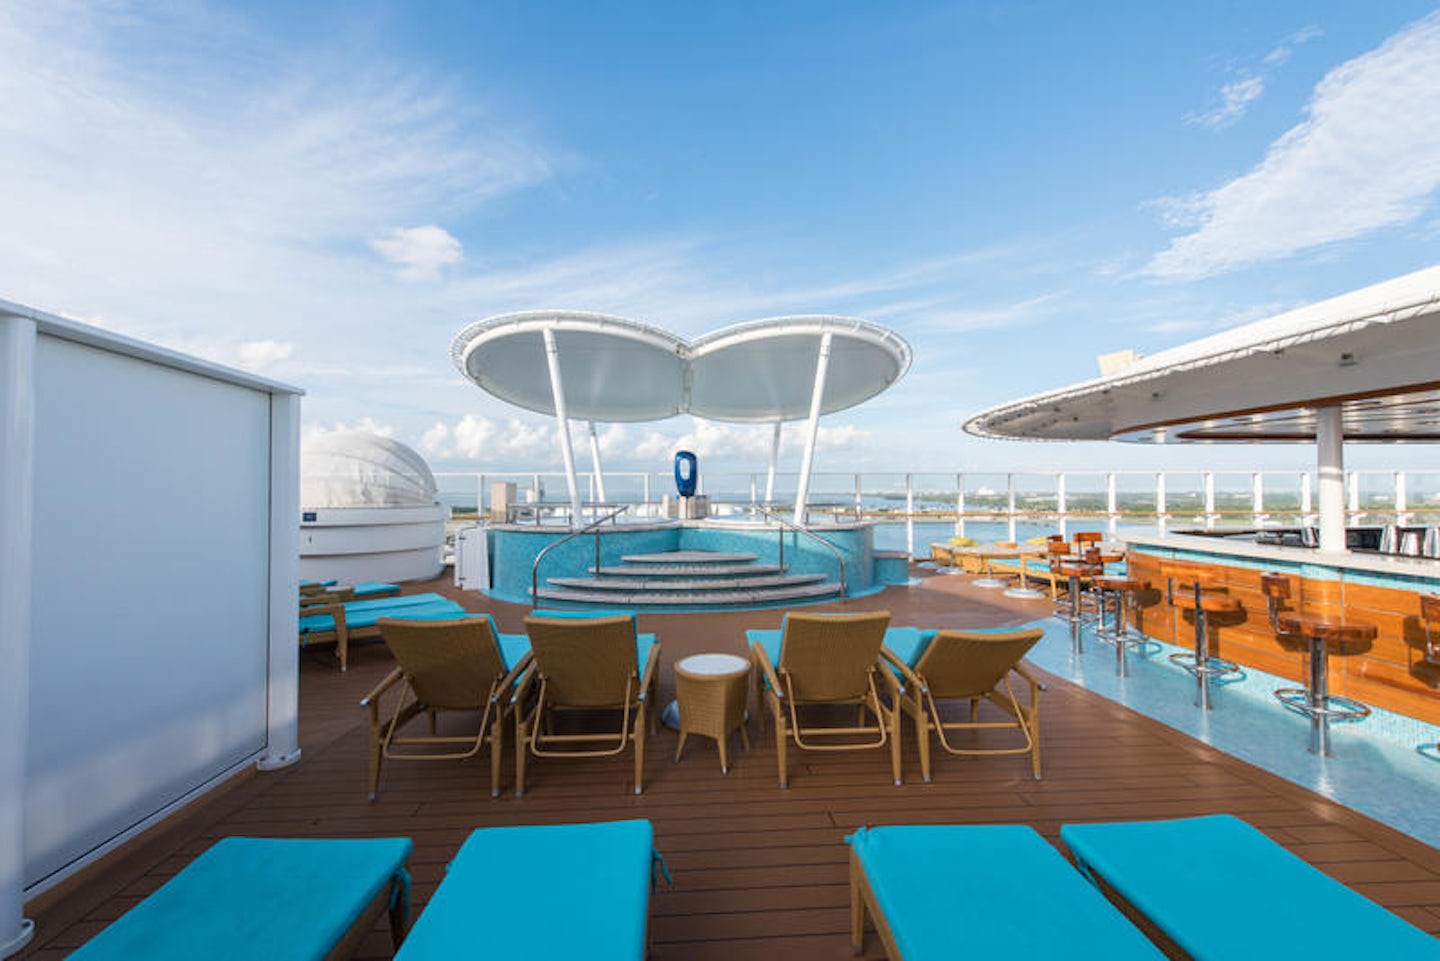 Vibe Beach Club on Norwegian Breakaway Cruise Ship - Cruise Critic